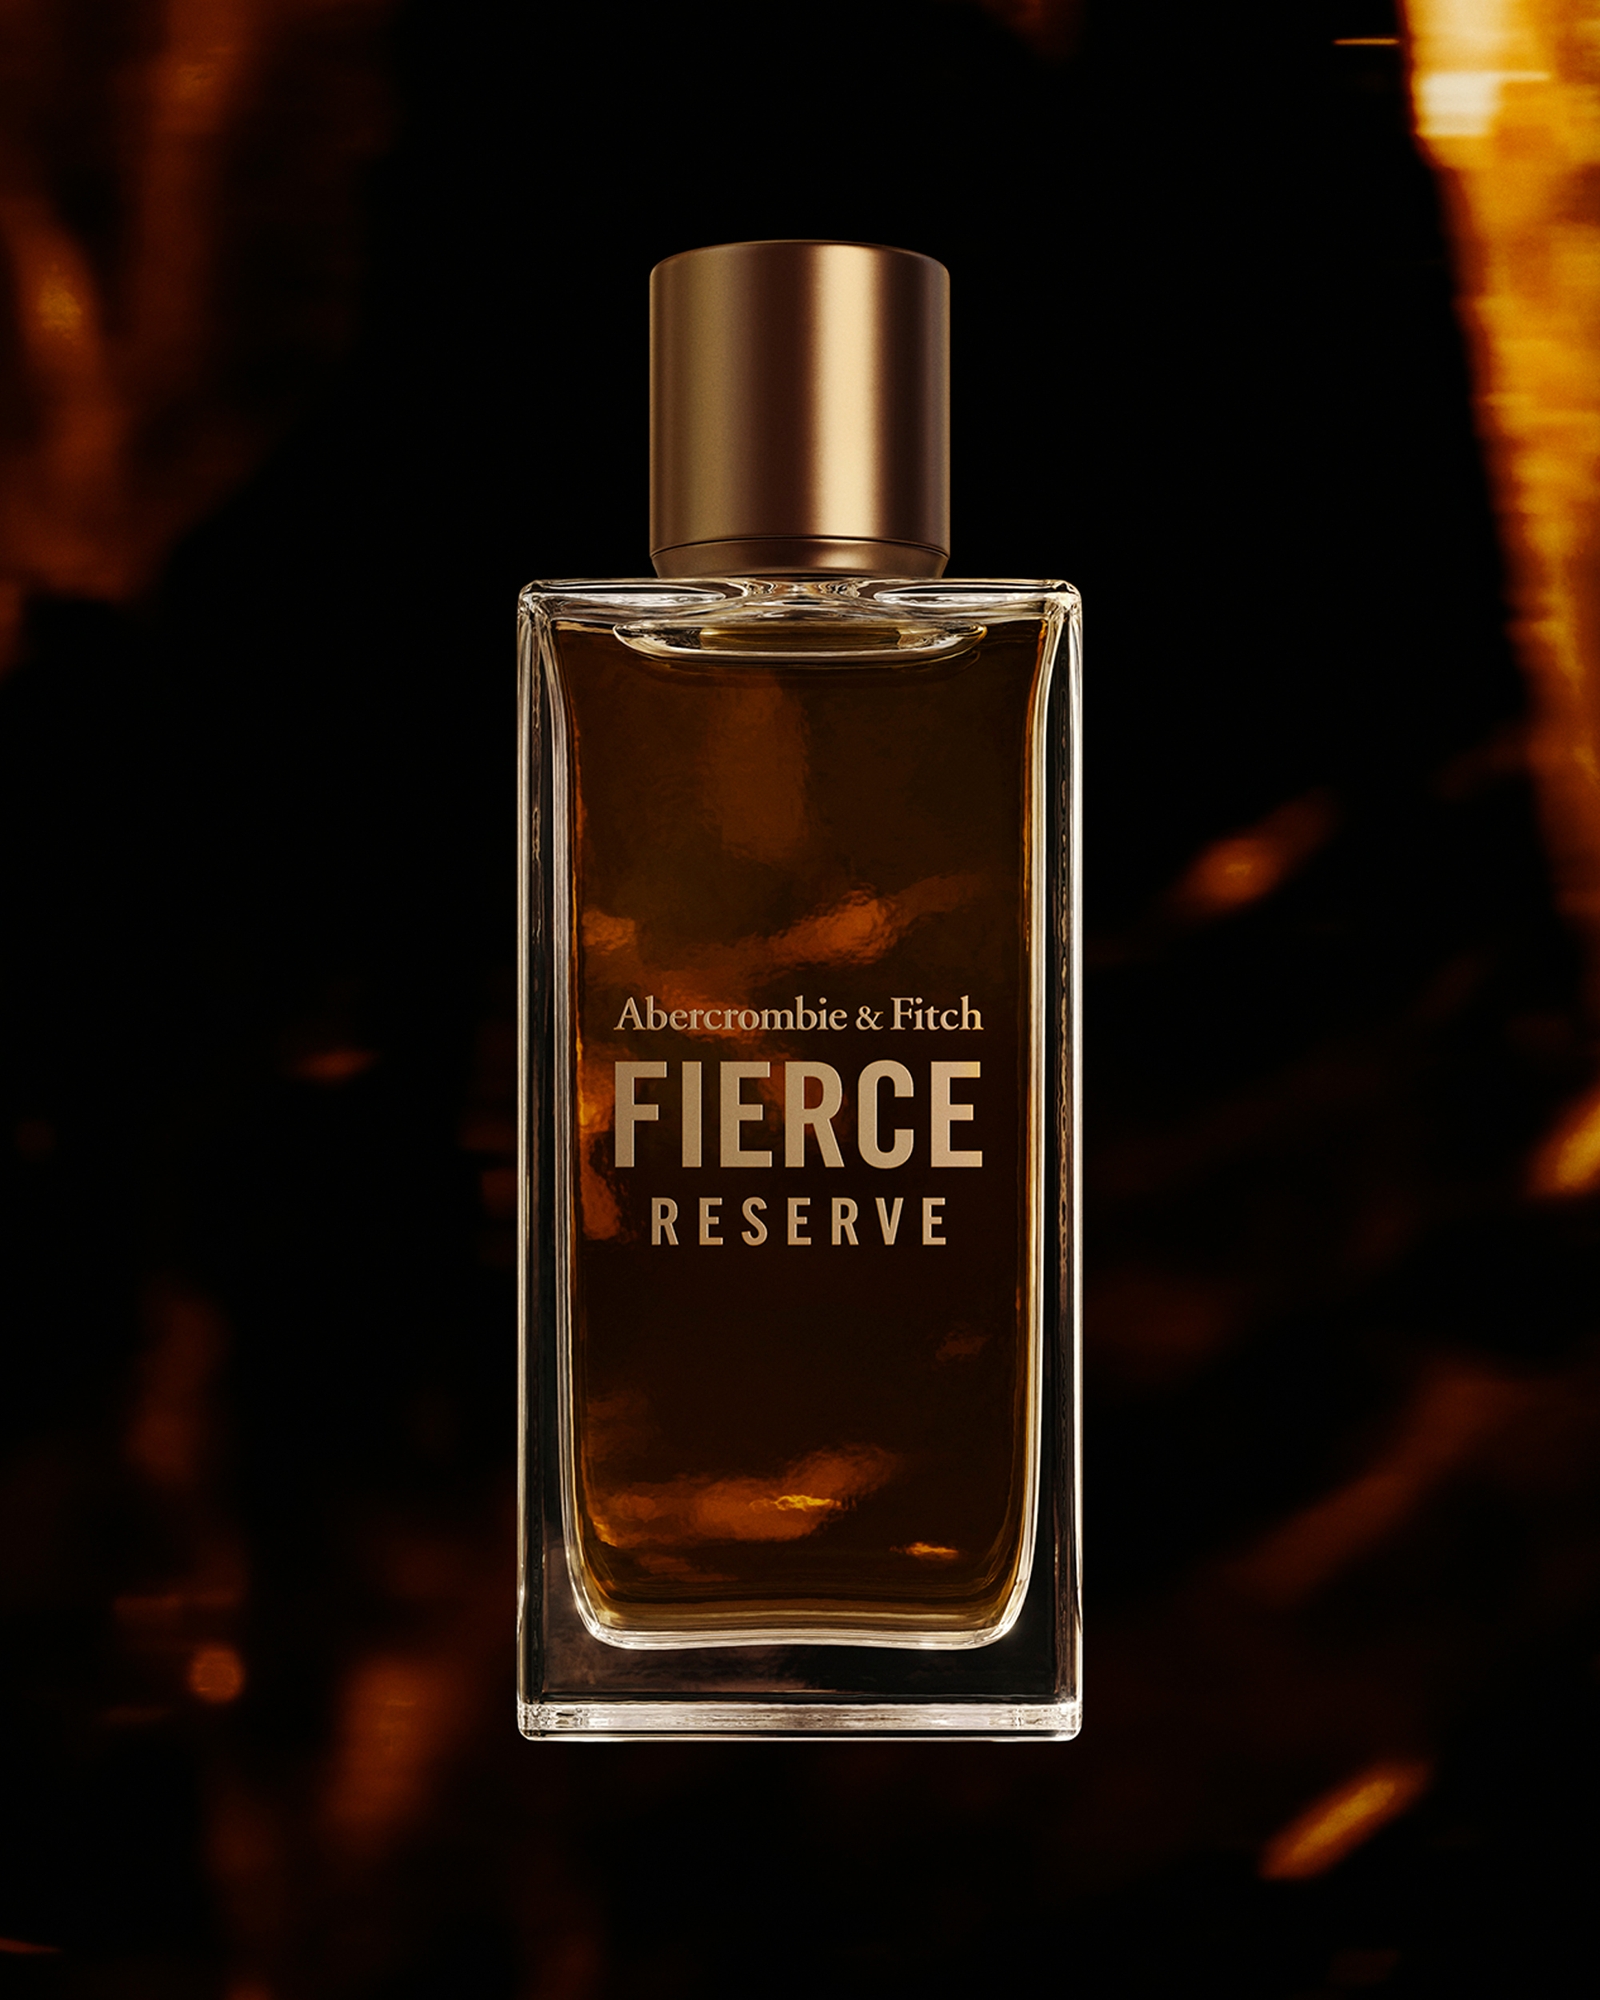 Fierce Perfume